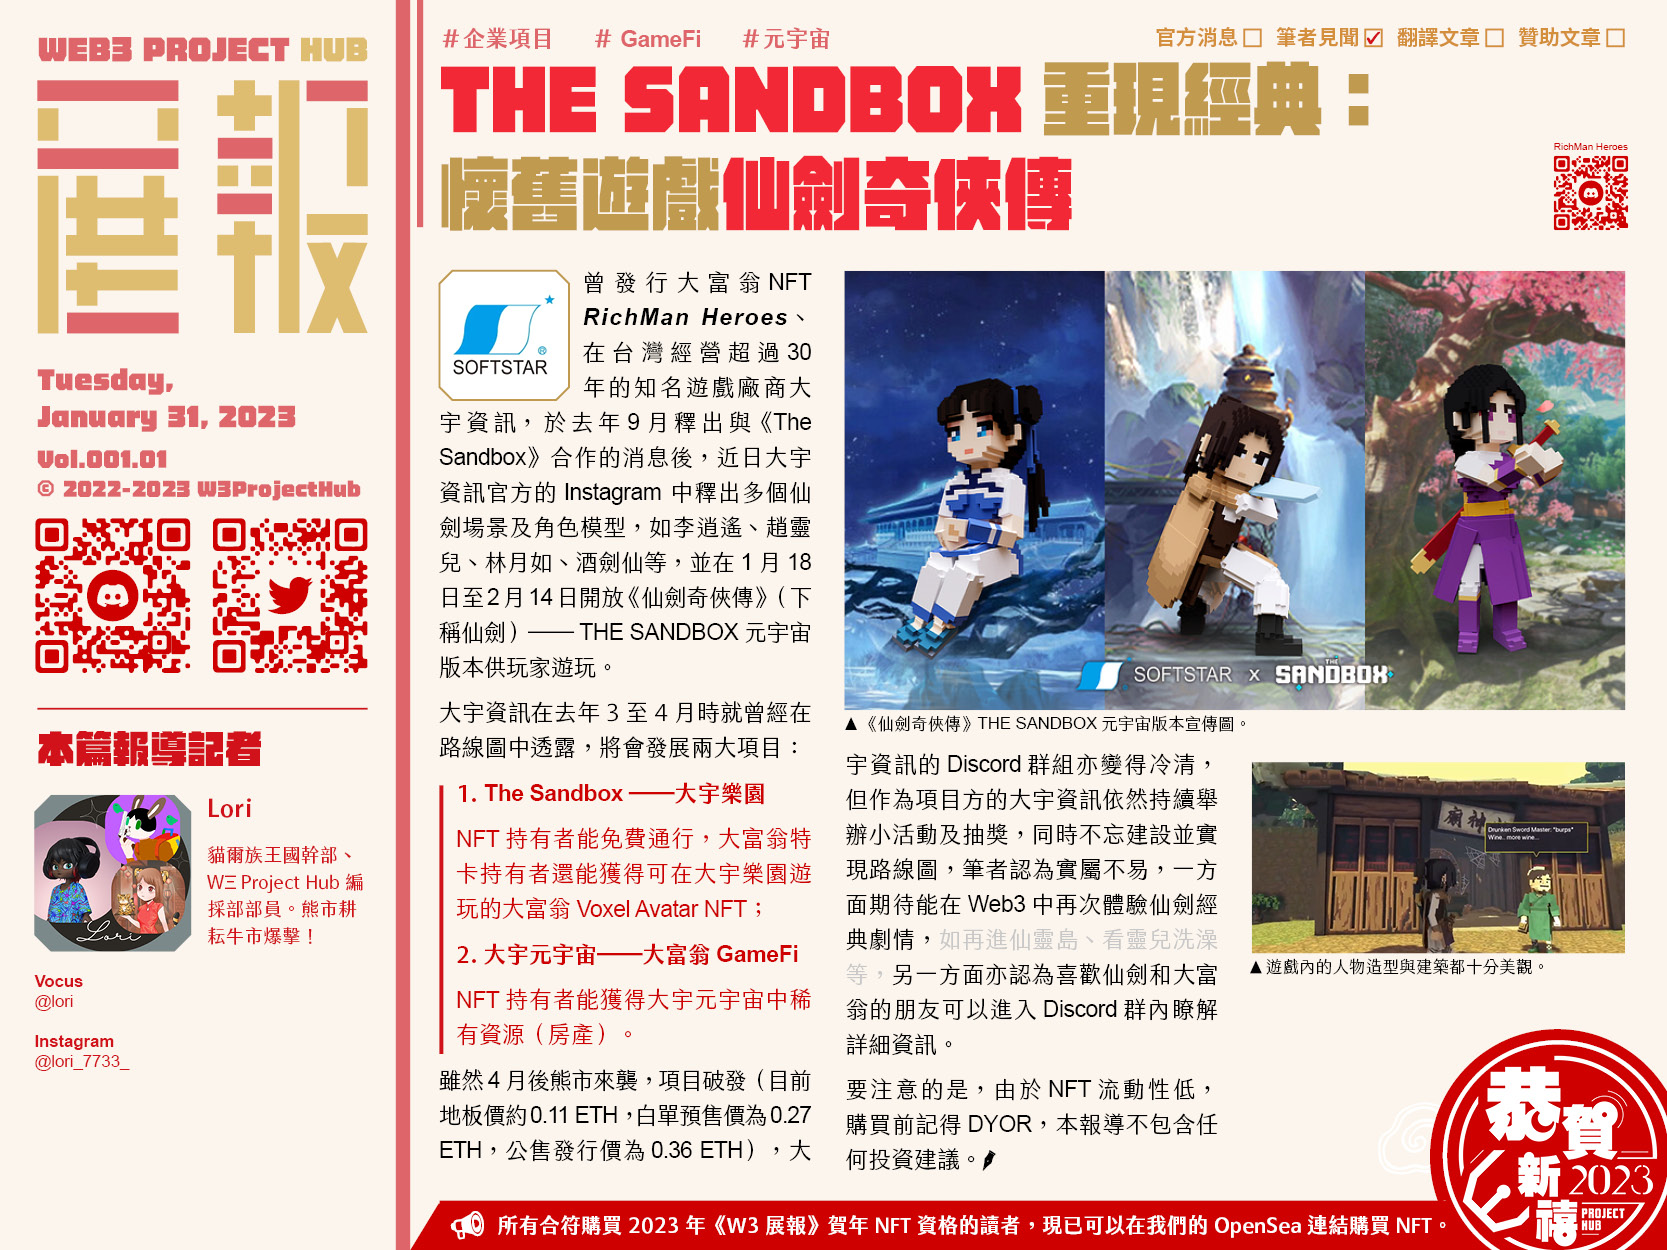  The Sandbox重現經典：懷舊遊戲仙劍奇俠傳